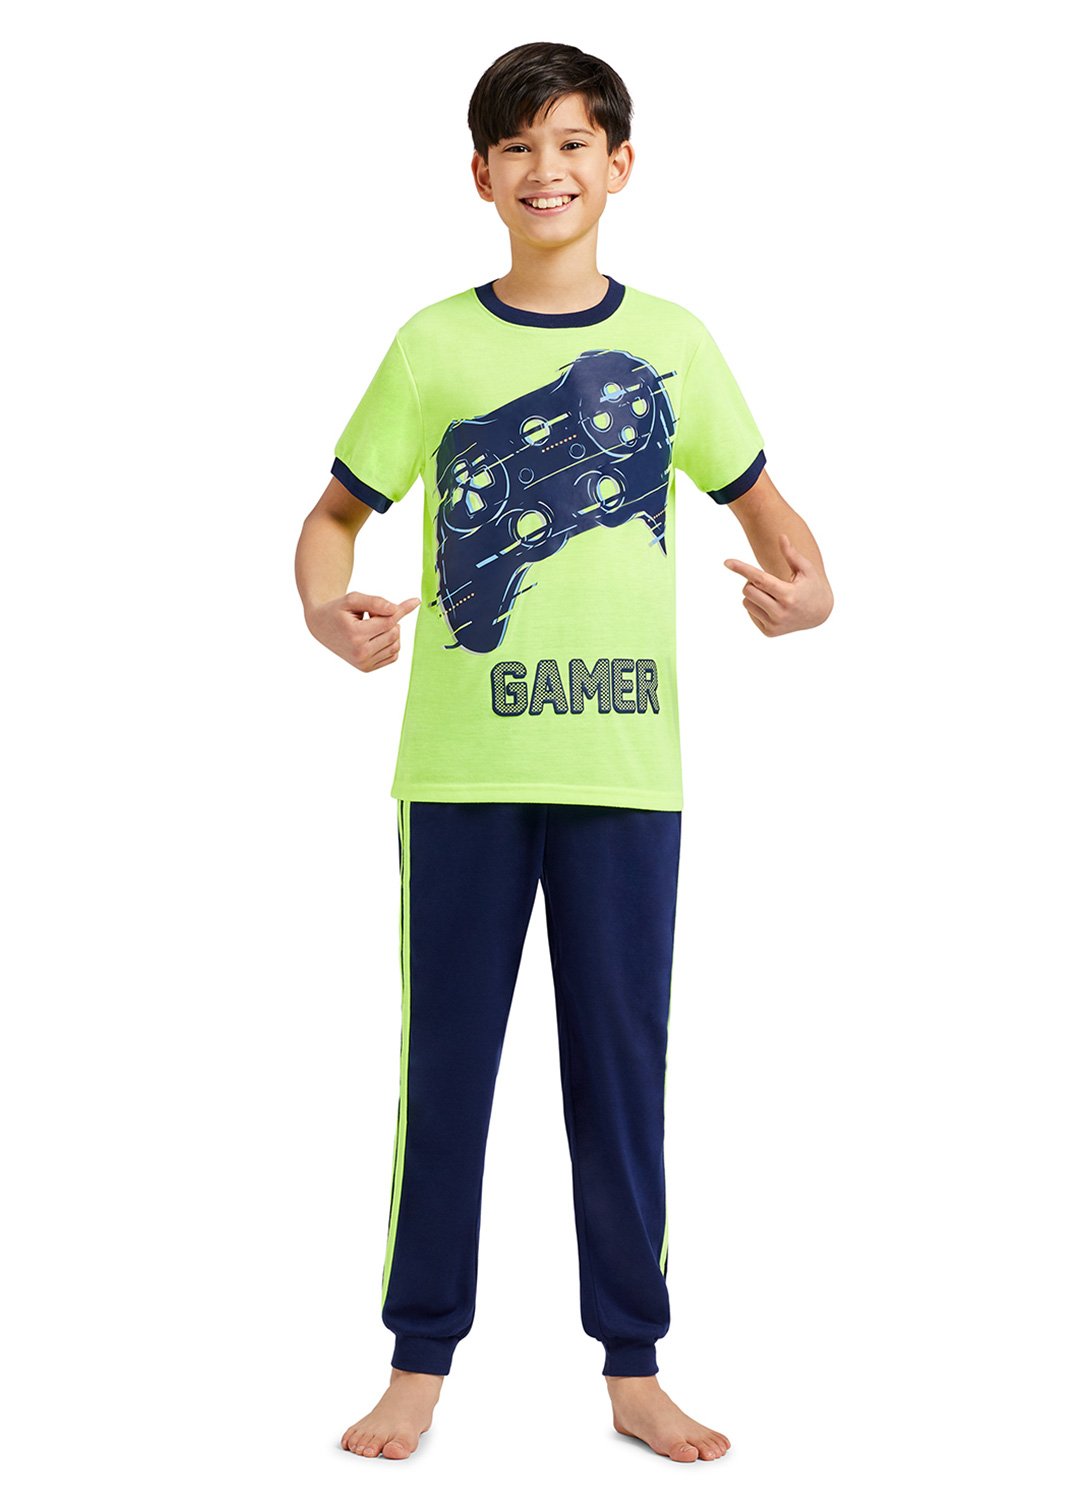 Boy wearing Gamer Print Top & Jogger Pants